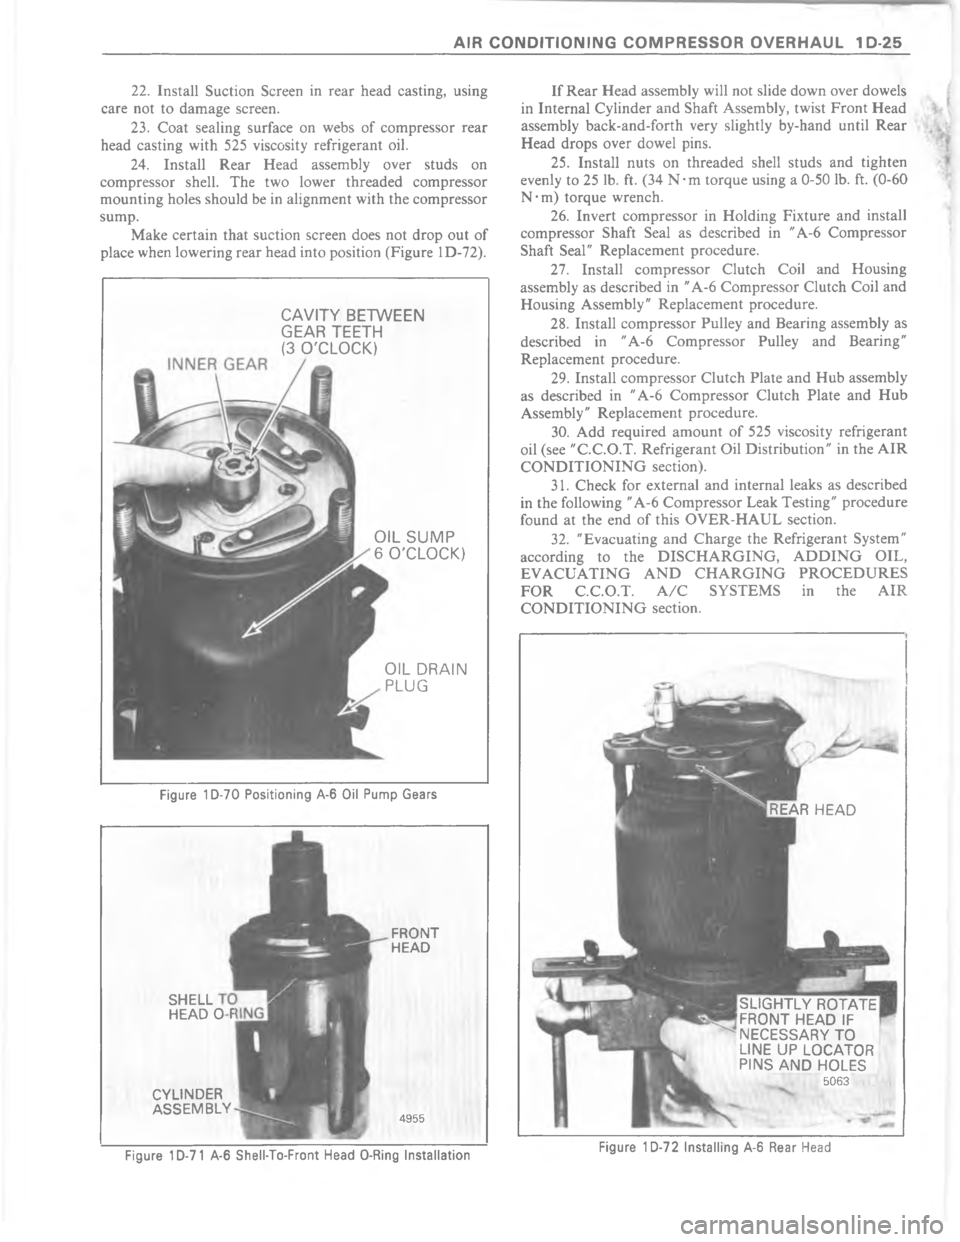 CHEVROLET LIGHT DUTY TRUCK 1980  Repair Everhaul Manual Downloaded from www.Manualslib.com manuals search engine  	    C @77       	    	       	    	 

7

7


